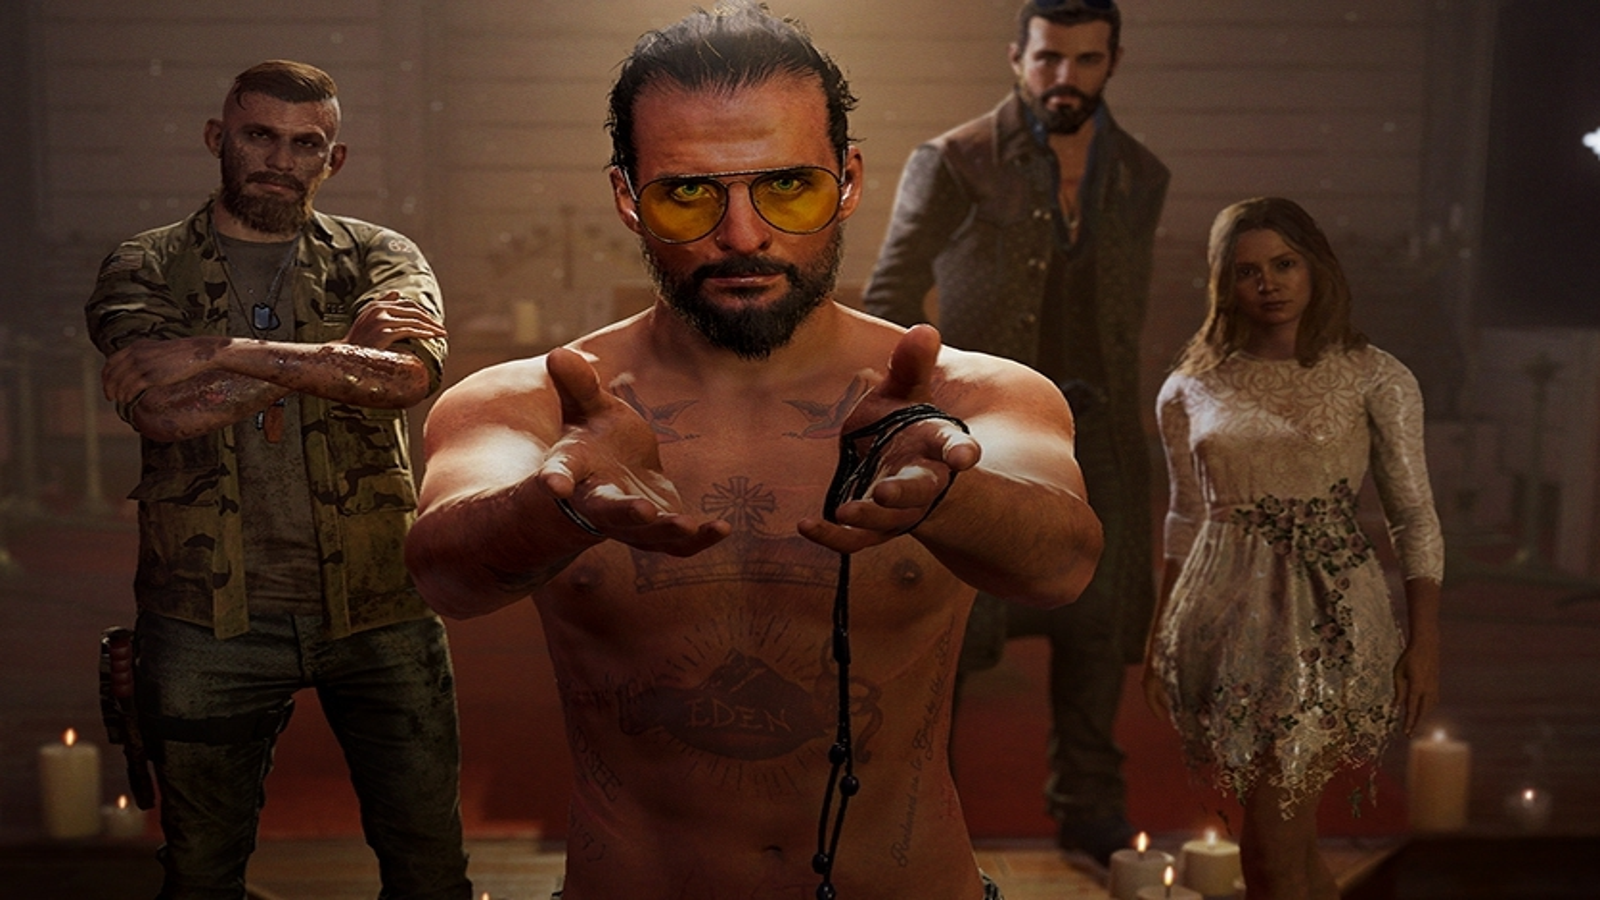 Far Cry 5 Ps4 Português Dublado Playstation